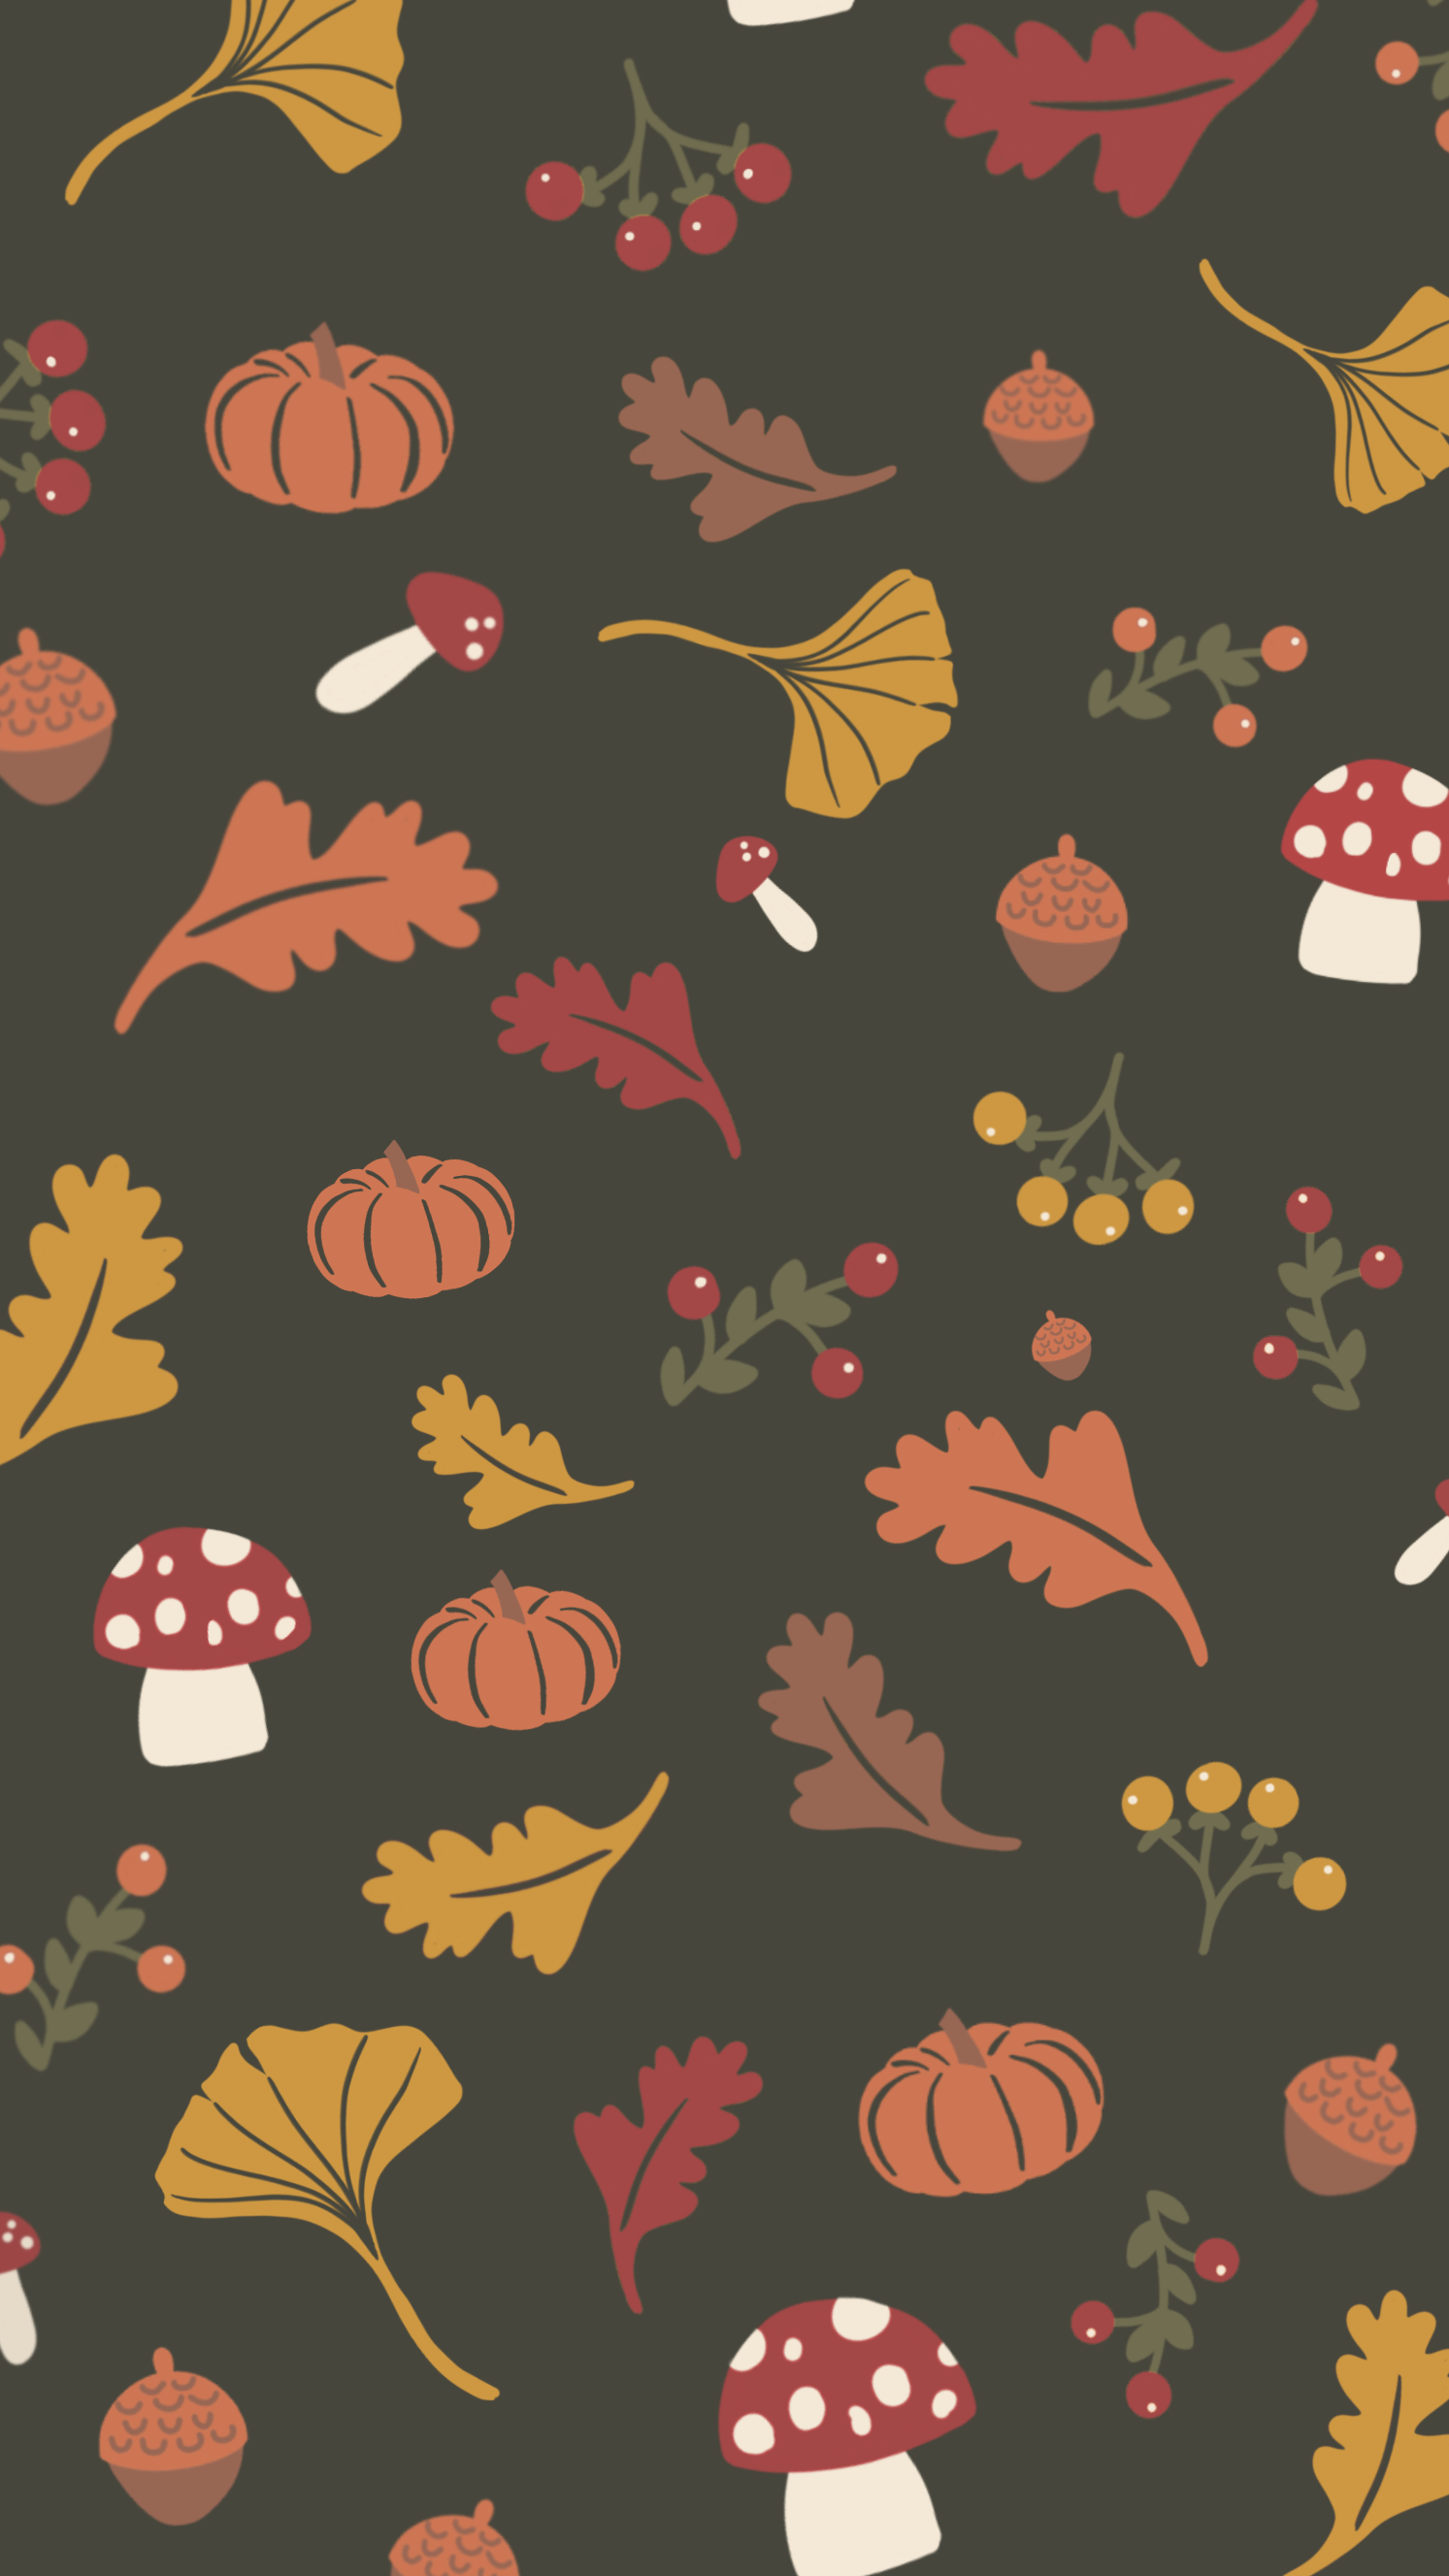 Free Seasonal Wallpapers for Christmas and Thanksgiving — Alix Carman